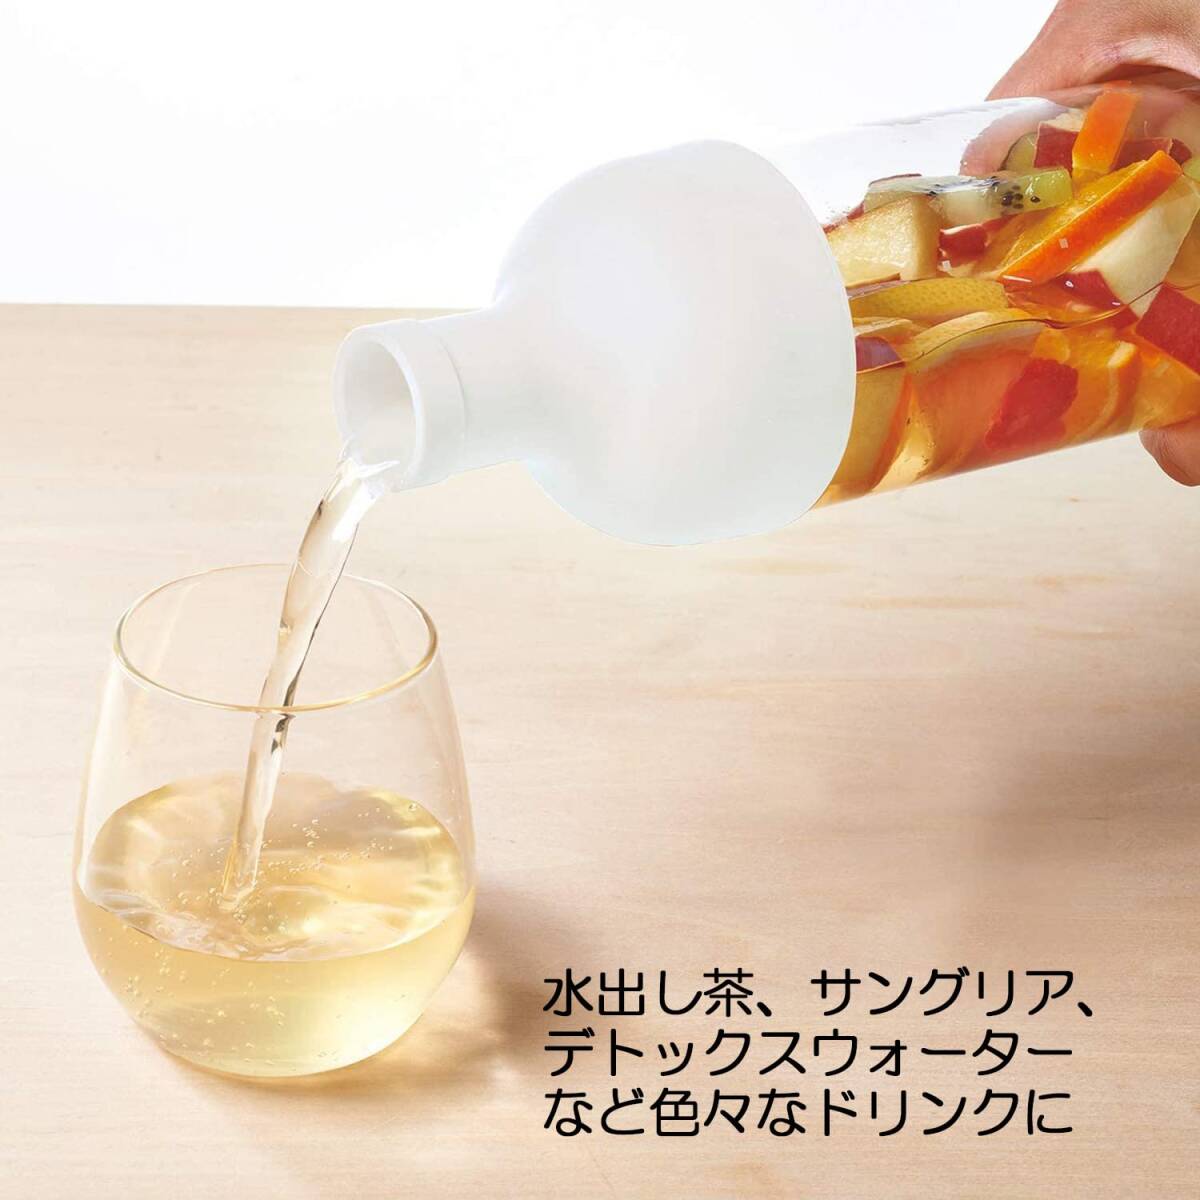 365methods ハリオ 日本製 フィルターインボトル 熱湯 食洗機対応 750ml ティープレス ミントグリーン GRFIB-75-365_画像4